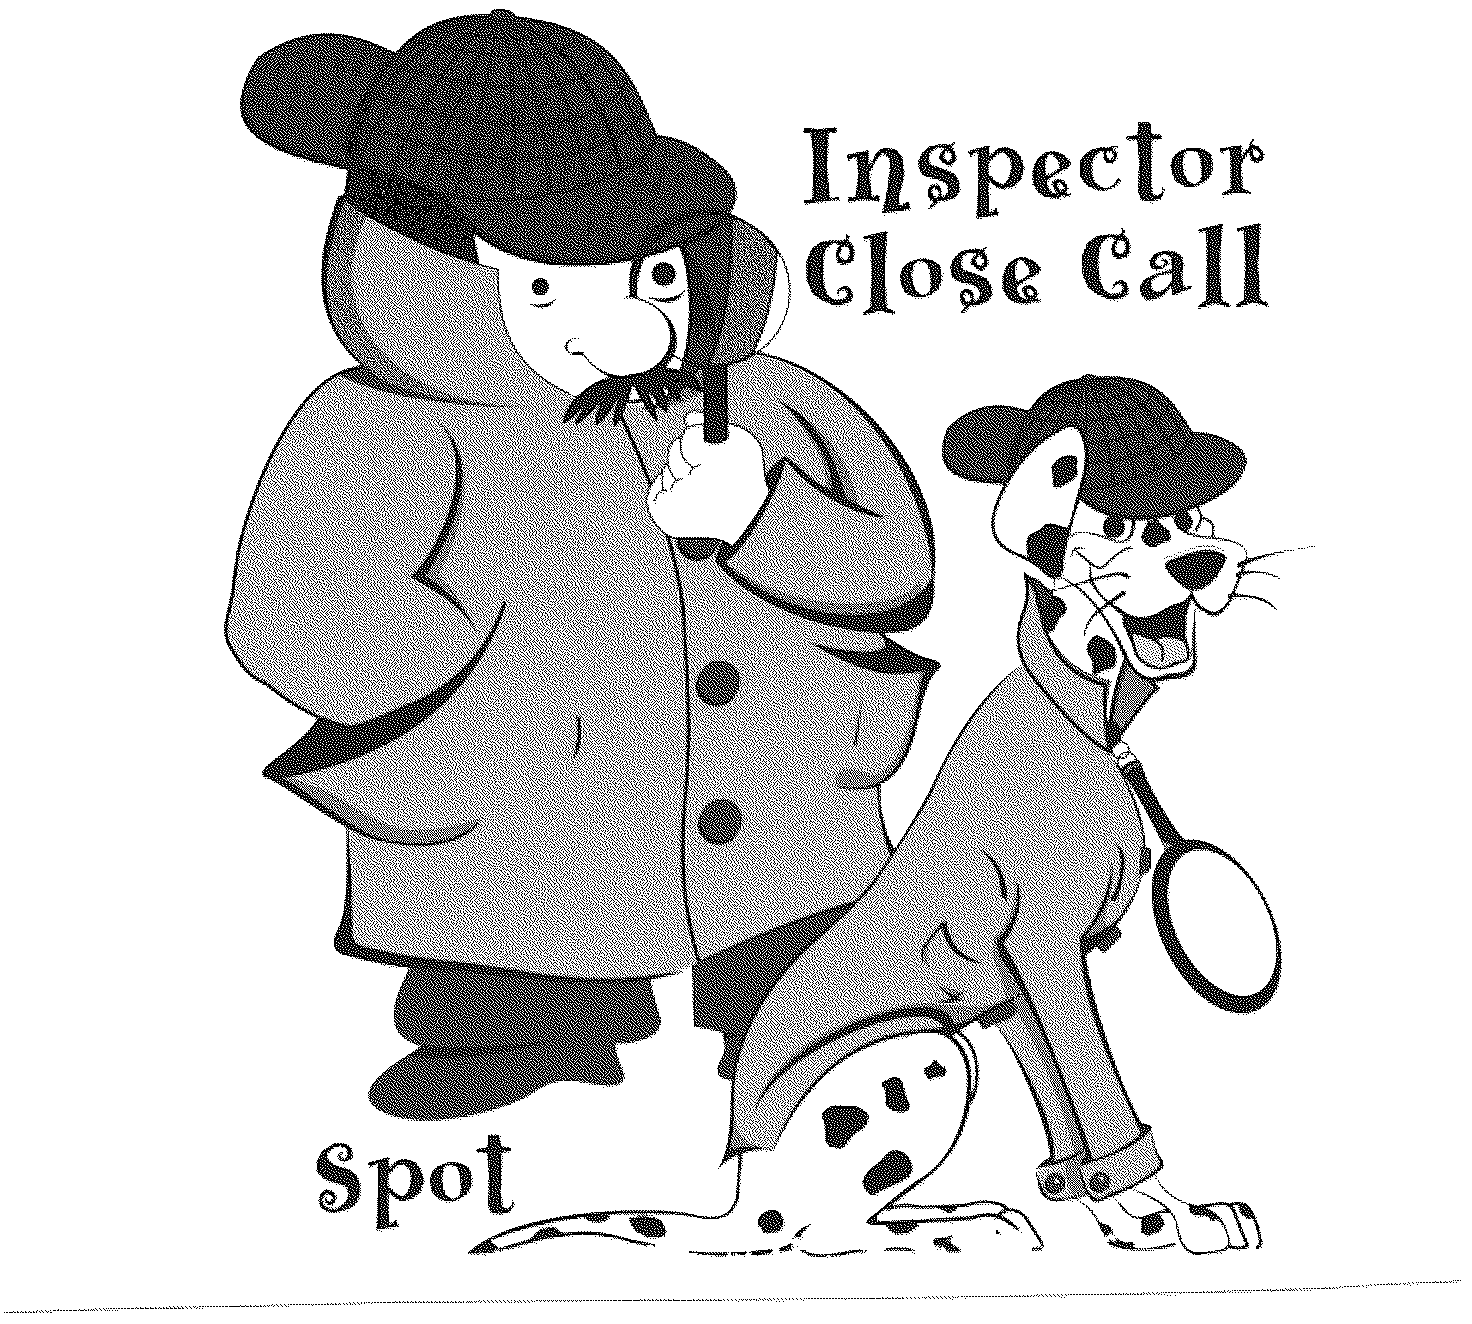  INSPECTOR CLOSE CALL SPOT